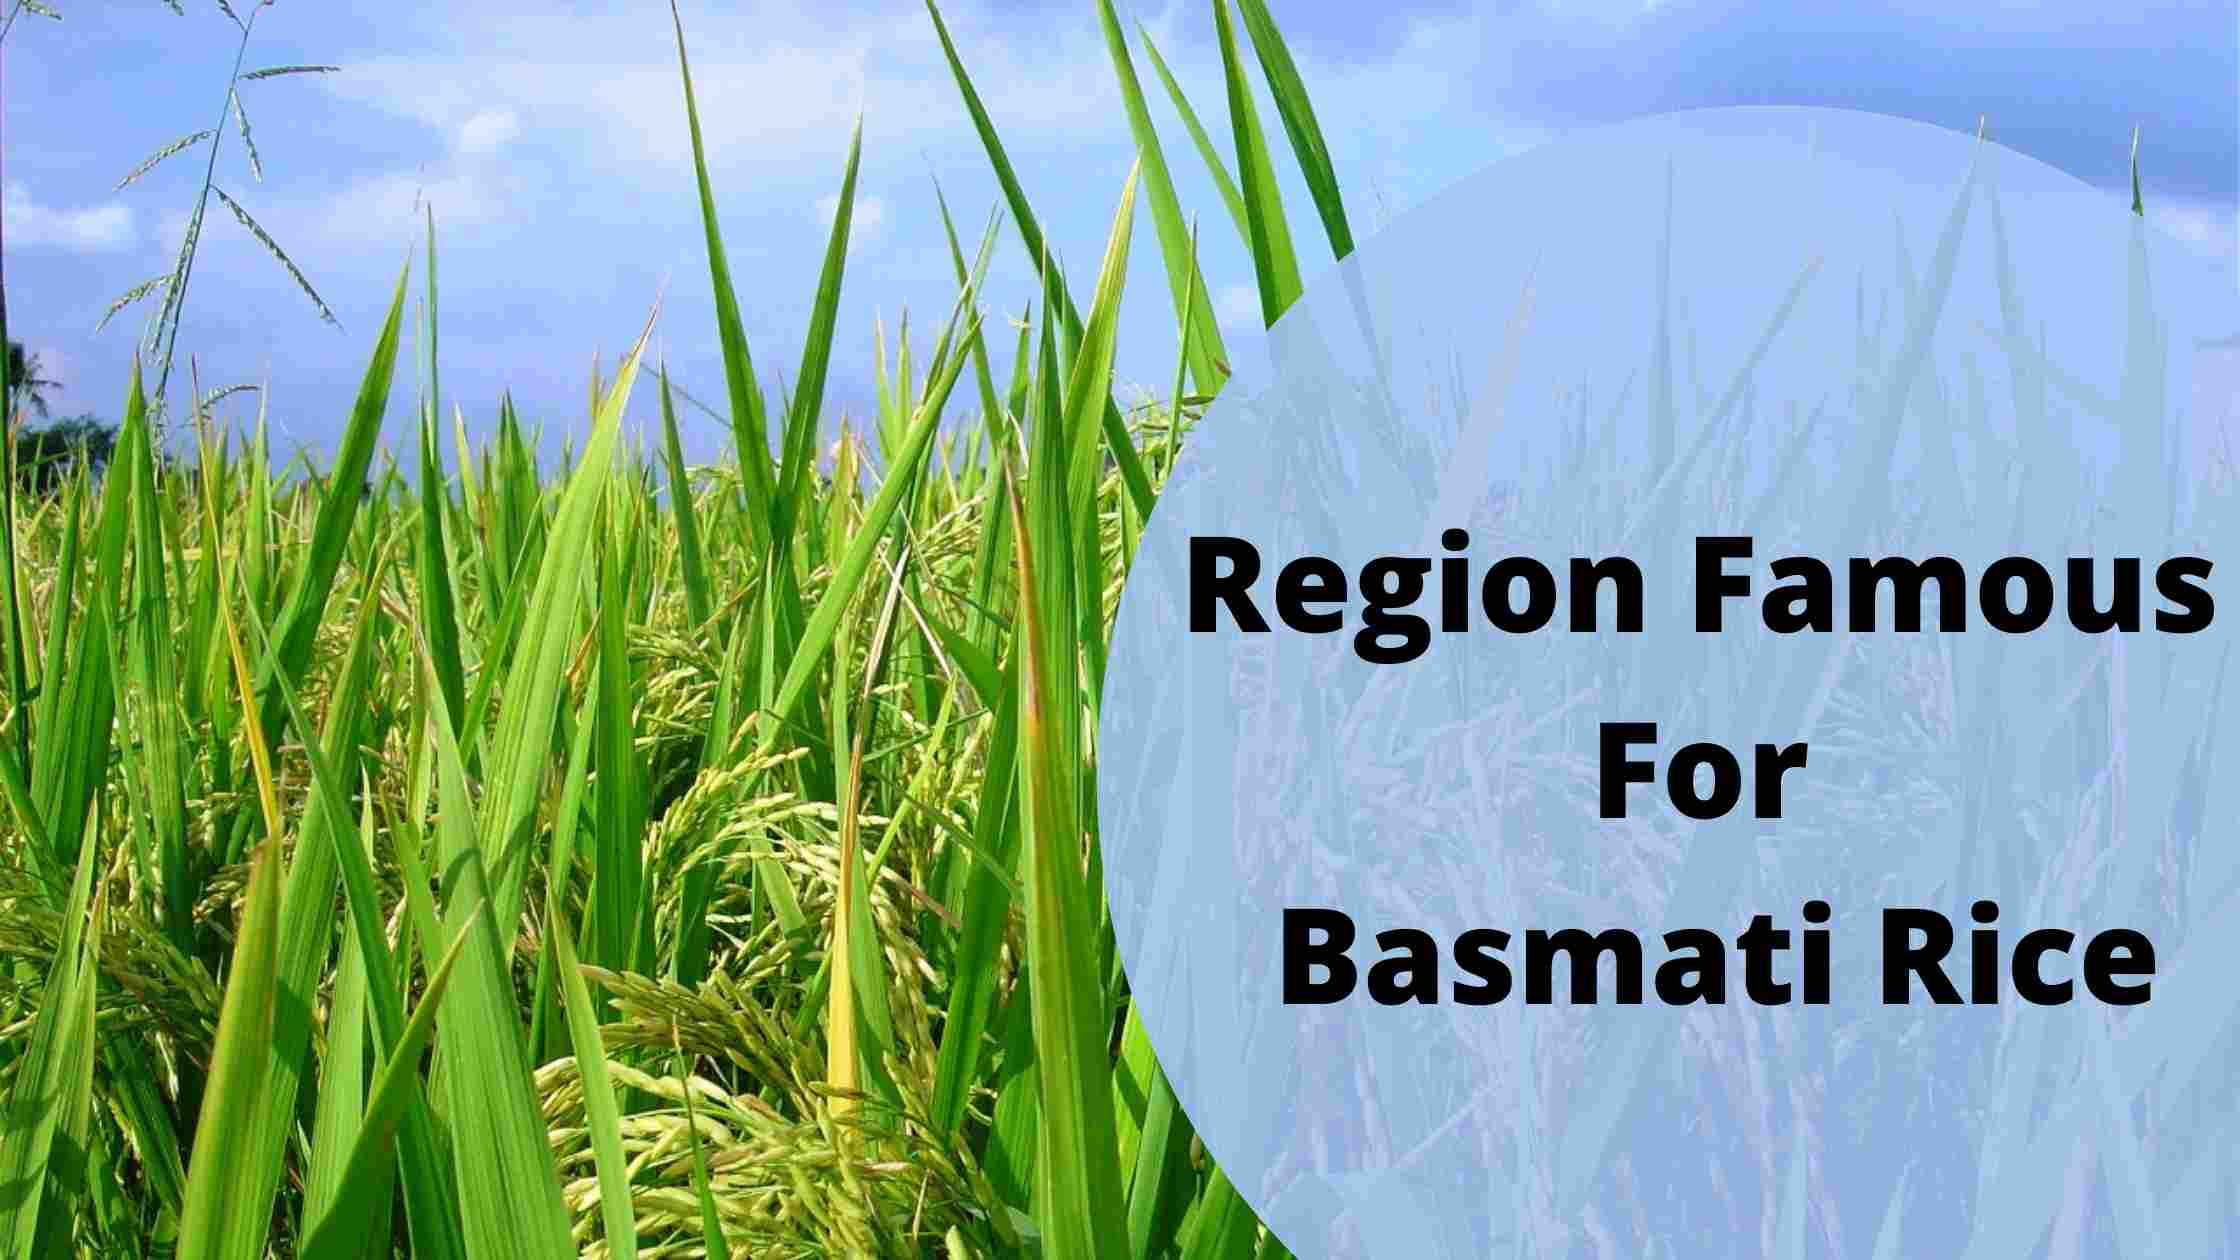 Region Famous For Basmati Rice